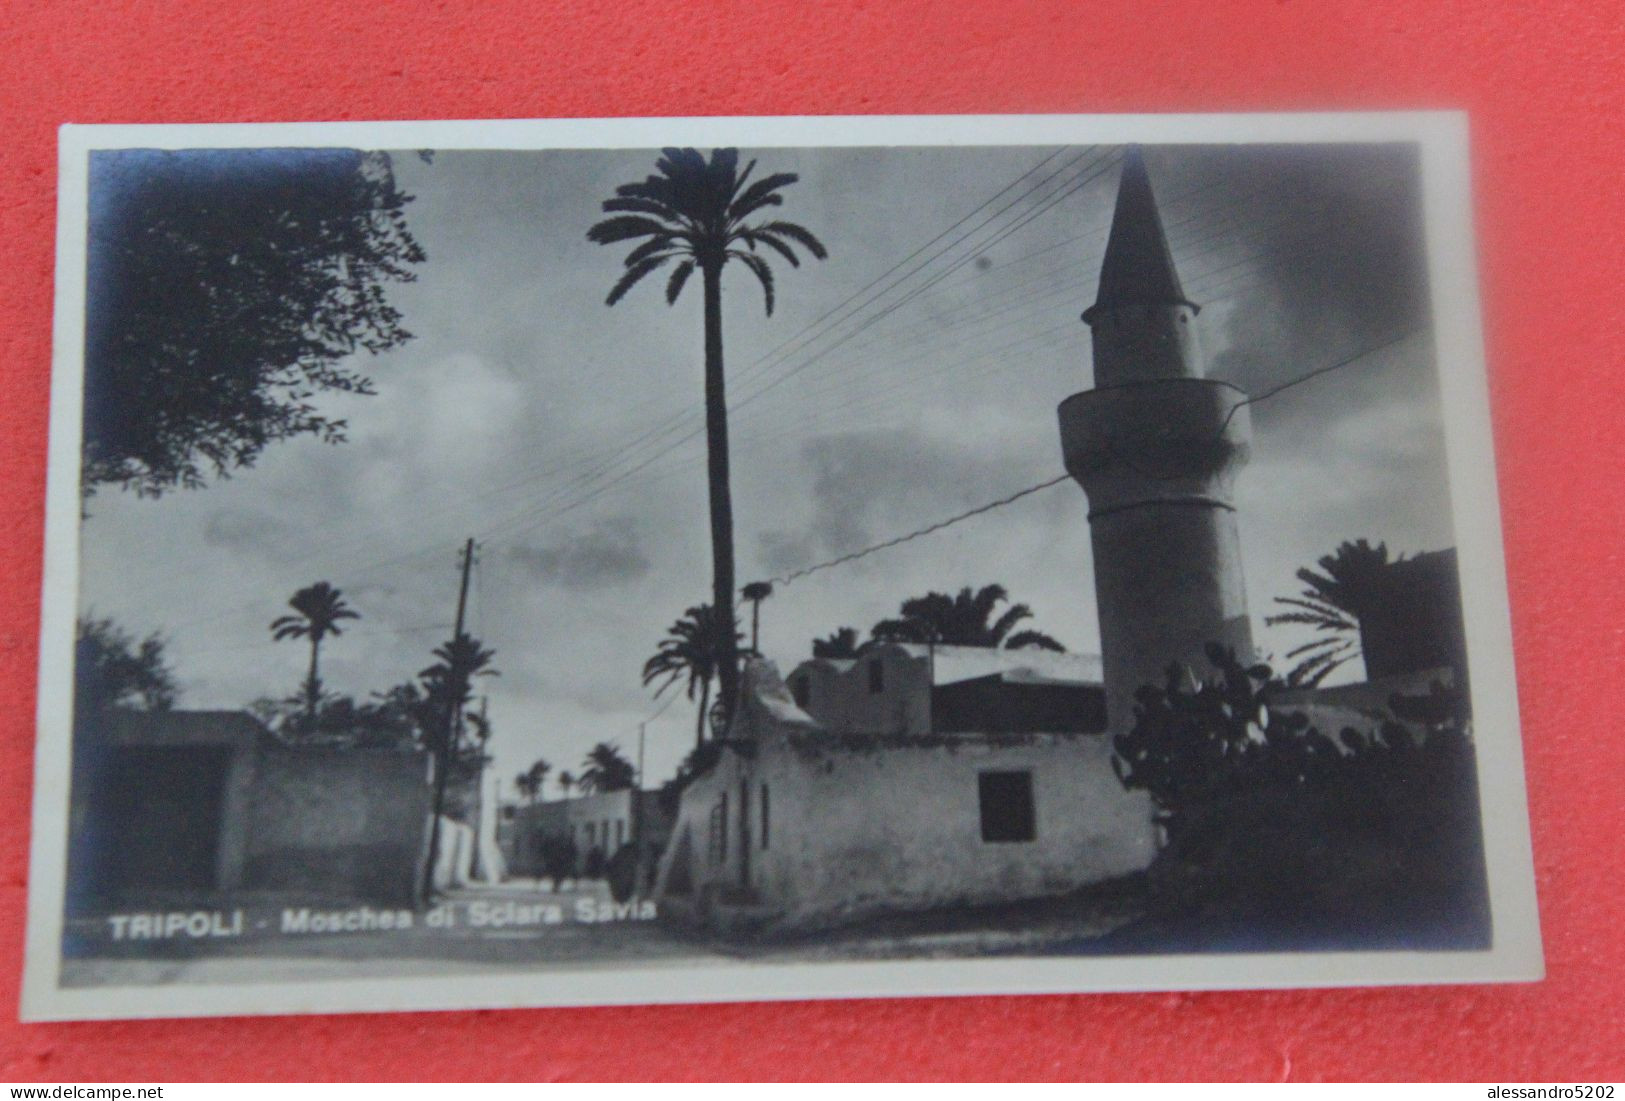 Libya Tripoli Moschea Sciara Savia Ed. Haggiag NV - Libyen